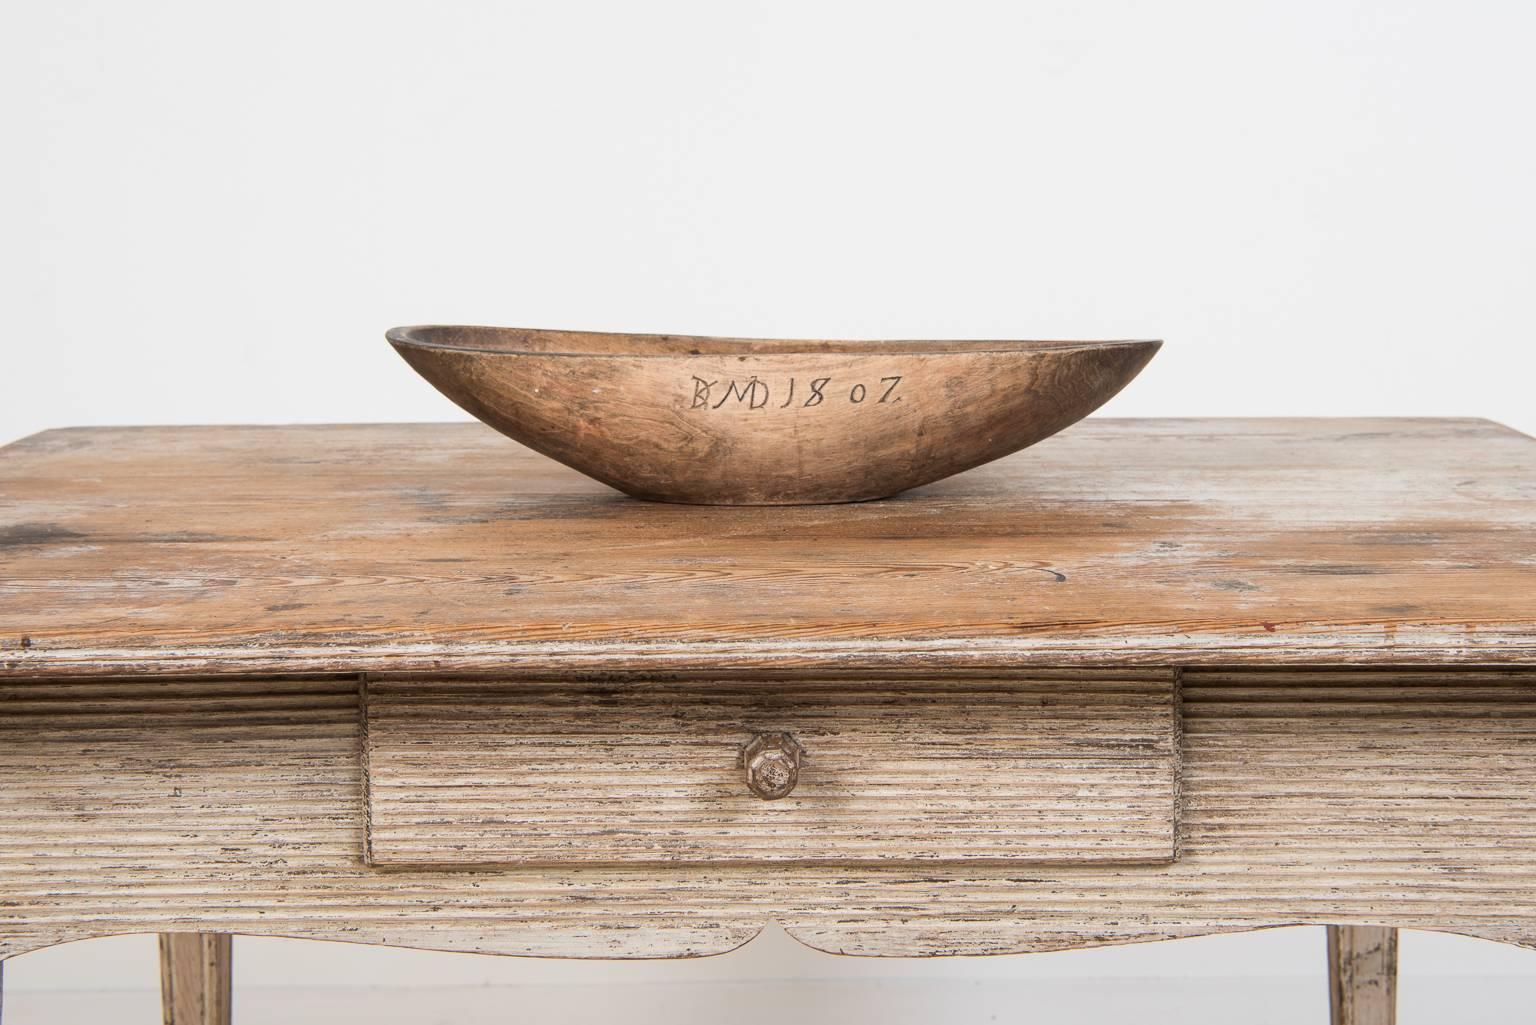 Folk Art Swedish Wooden Bowl Dating from 1807